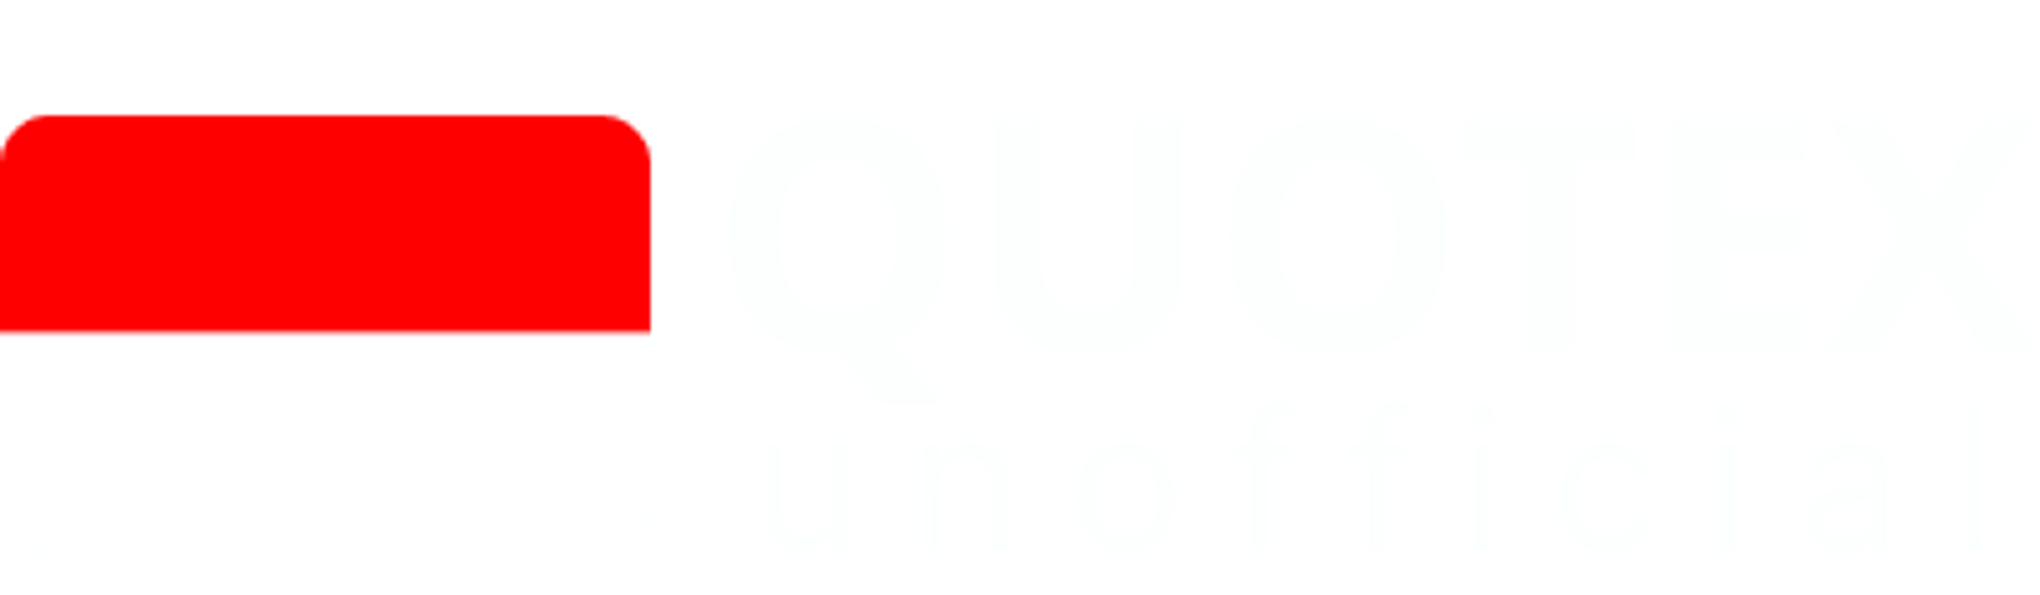 Quotex logo